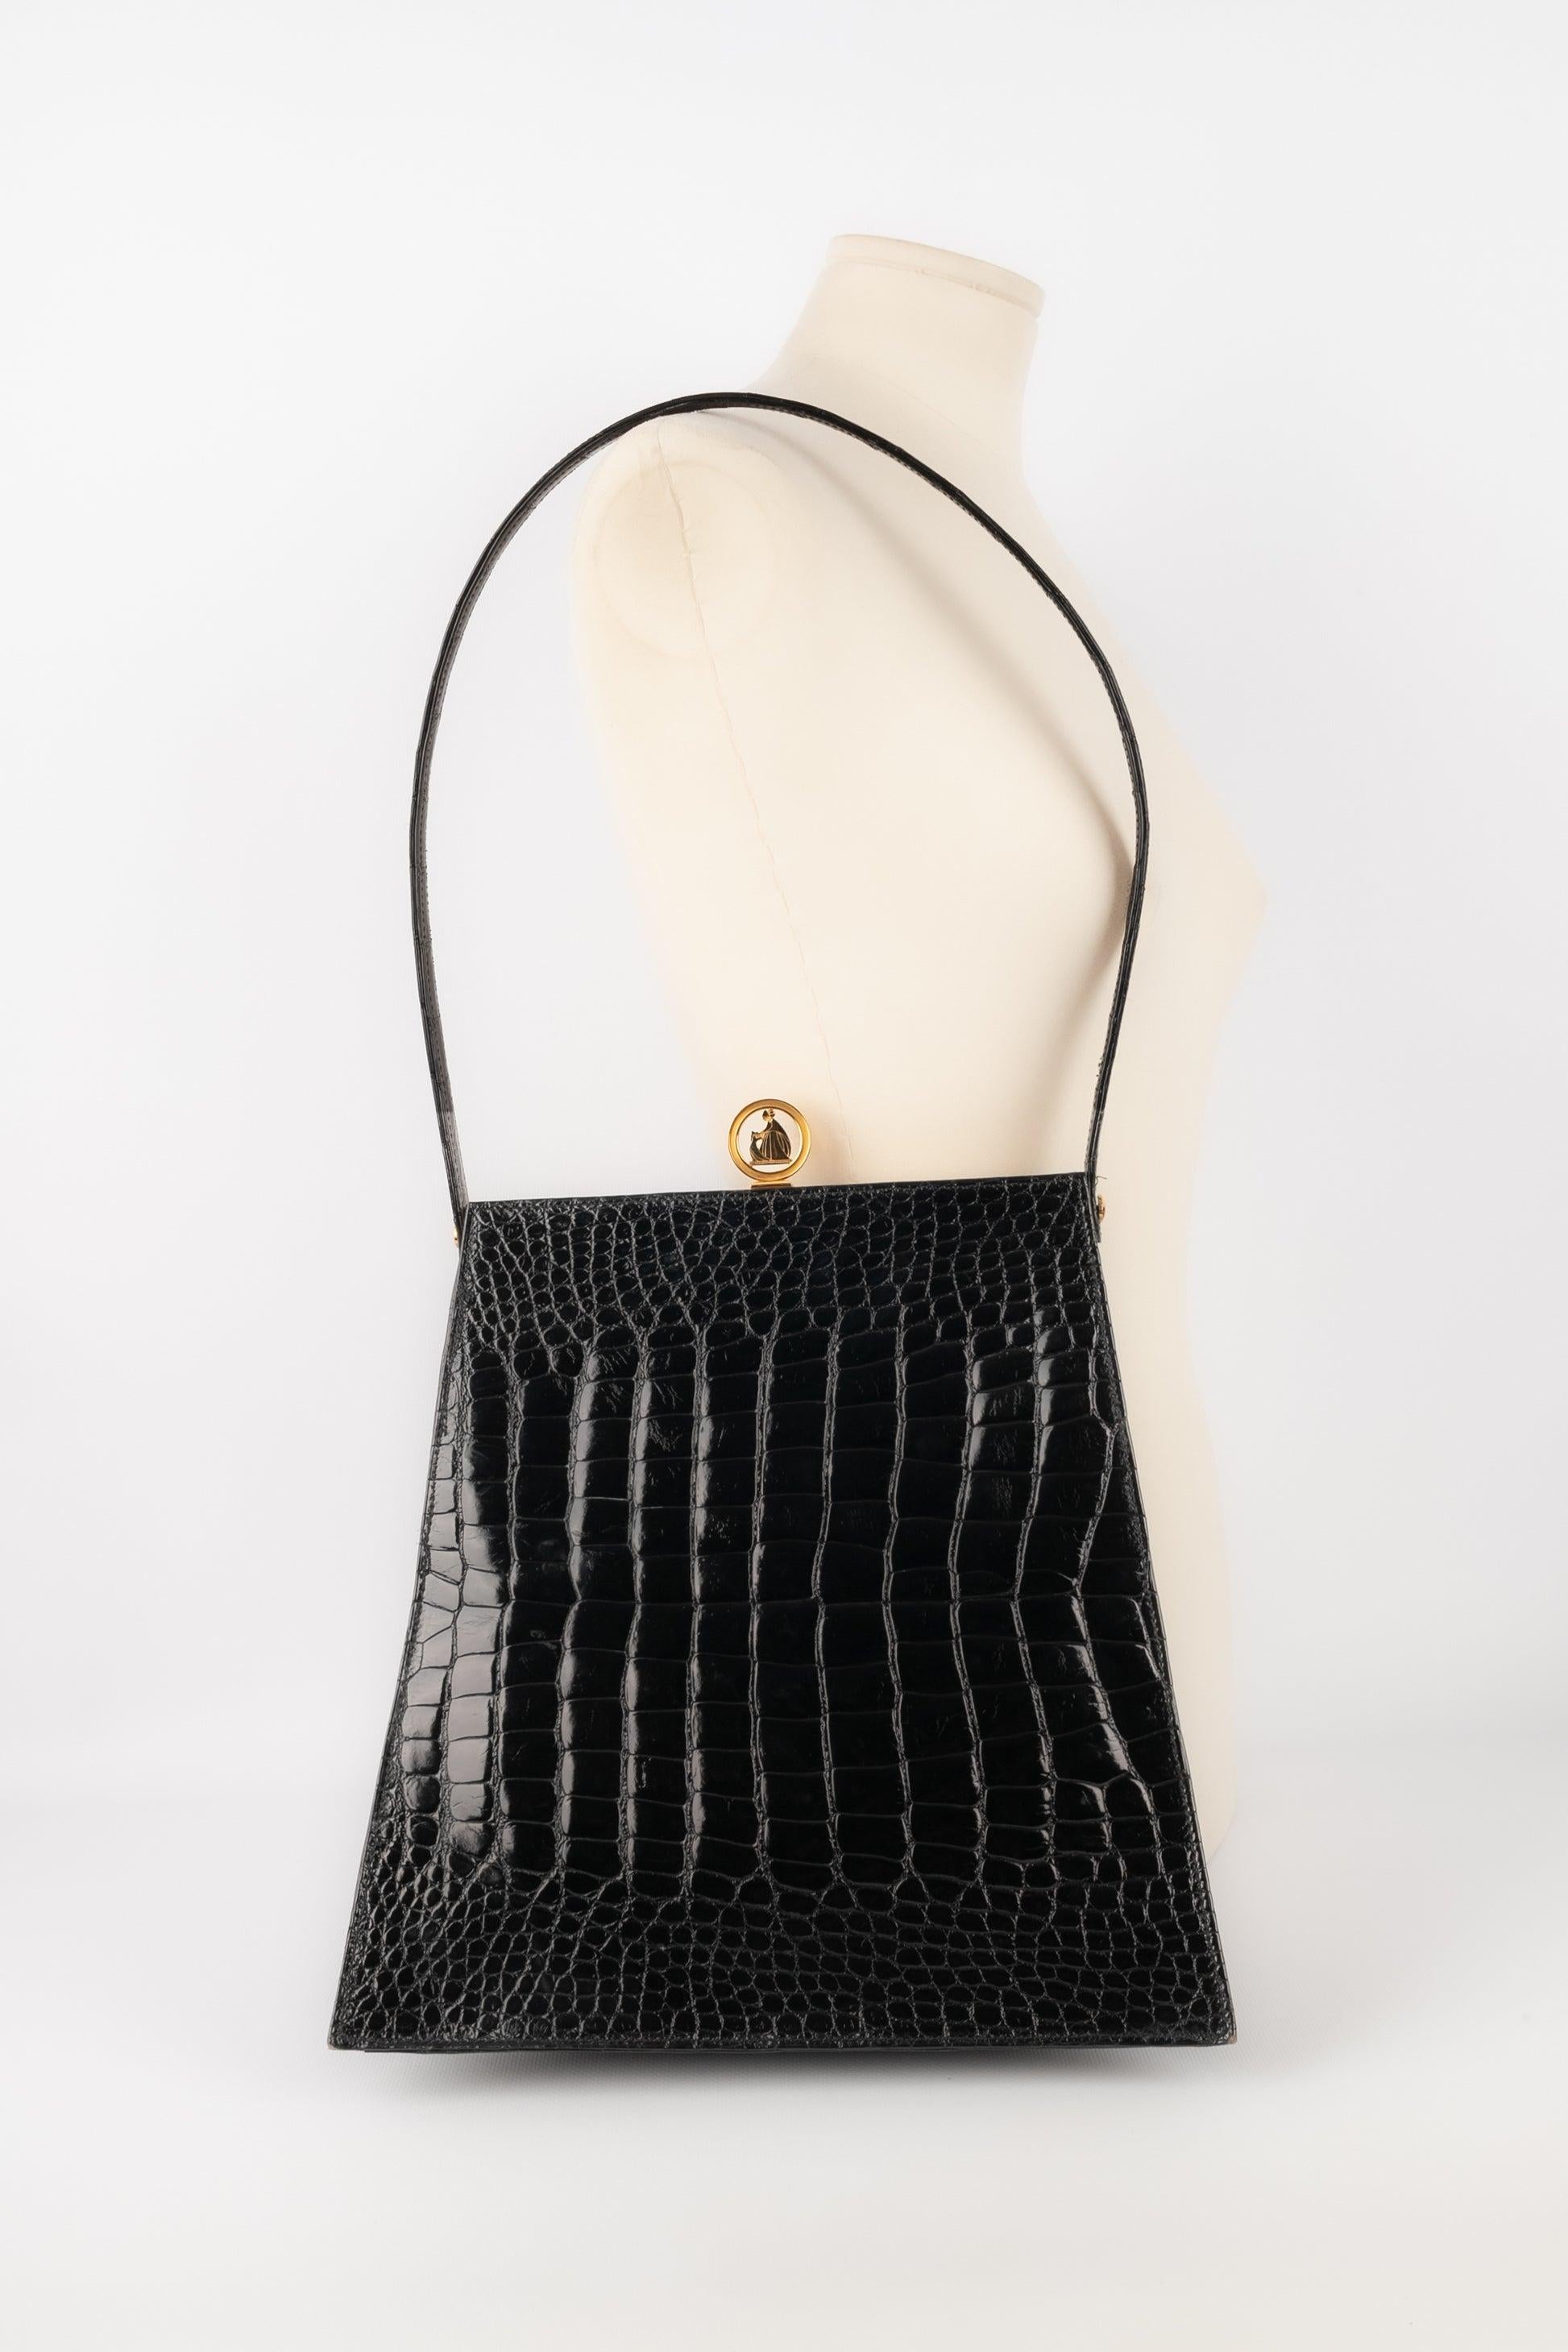 Lanvin Crocodile Black Exotic Leather Bag 5